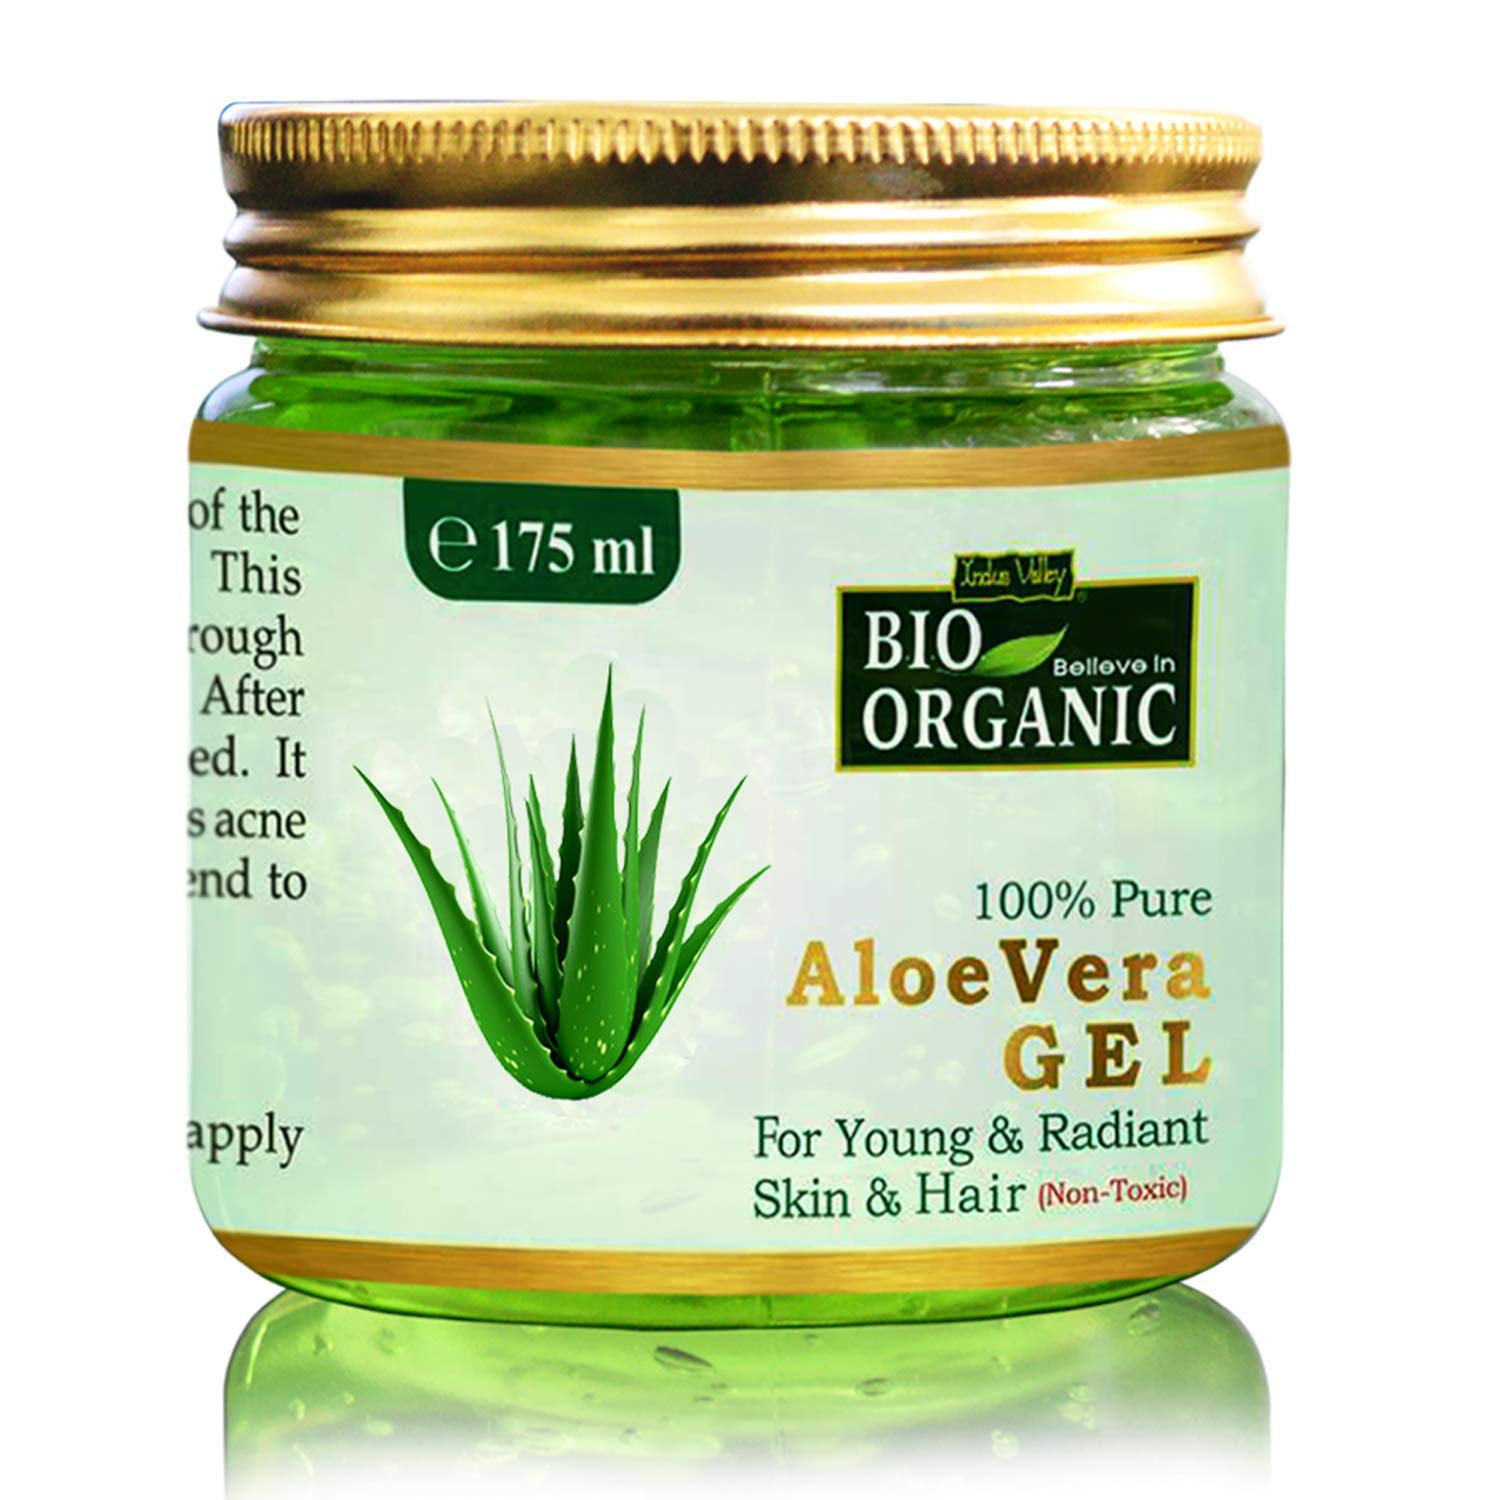 Il Pygmalion verlamming Indus Valley Bio Organic Non-Toxic Aloe Vera Gel for Acne, Scars, Glowing &  Radiant Skin Treatment-175ml - Walmart.com